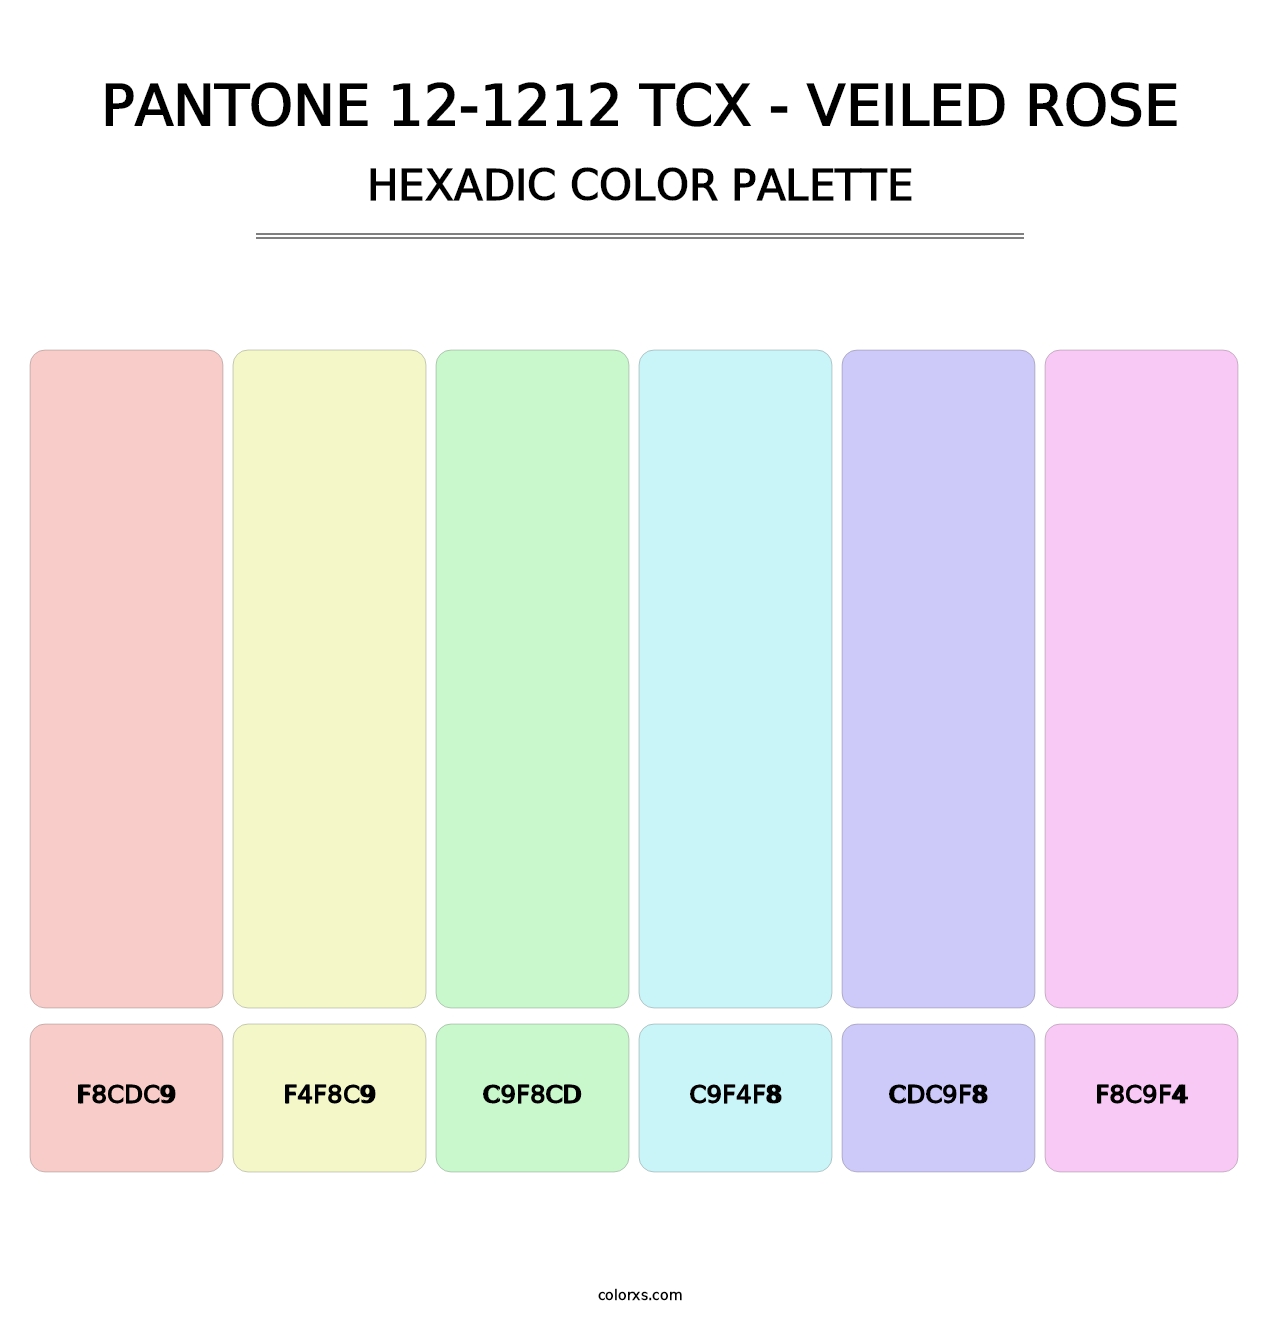 PANTONE 12-1212 TCX - Veiled Rose - Hexadic Color Palette